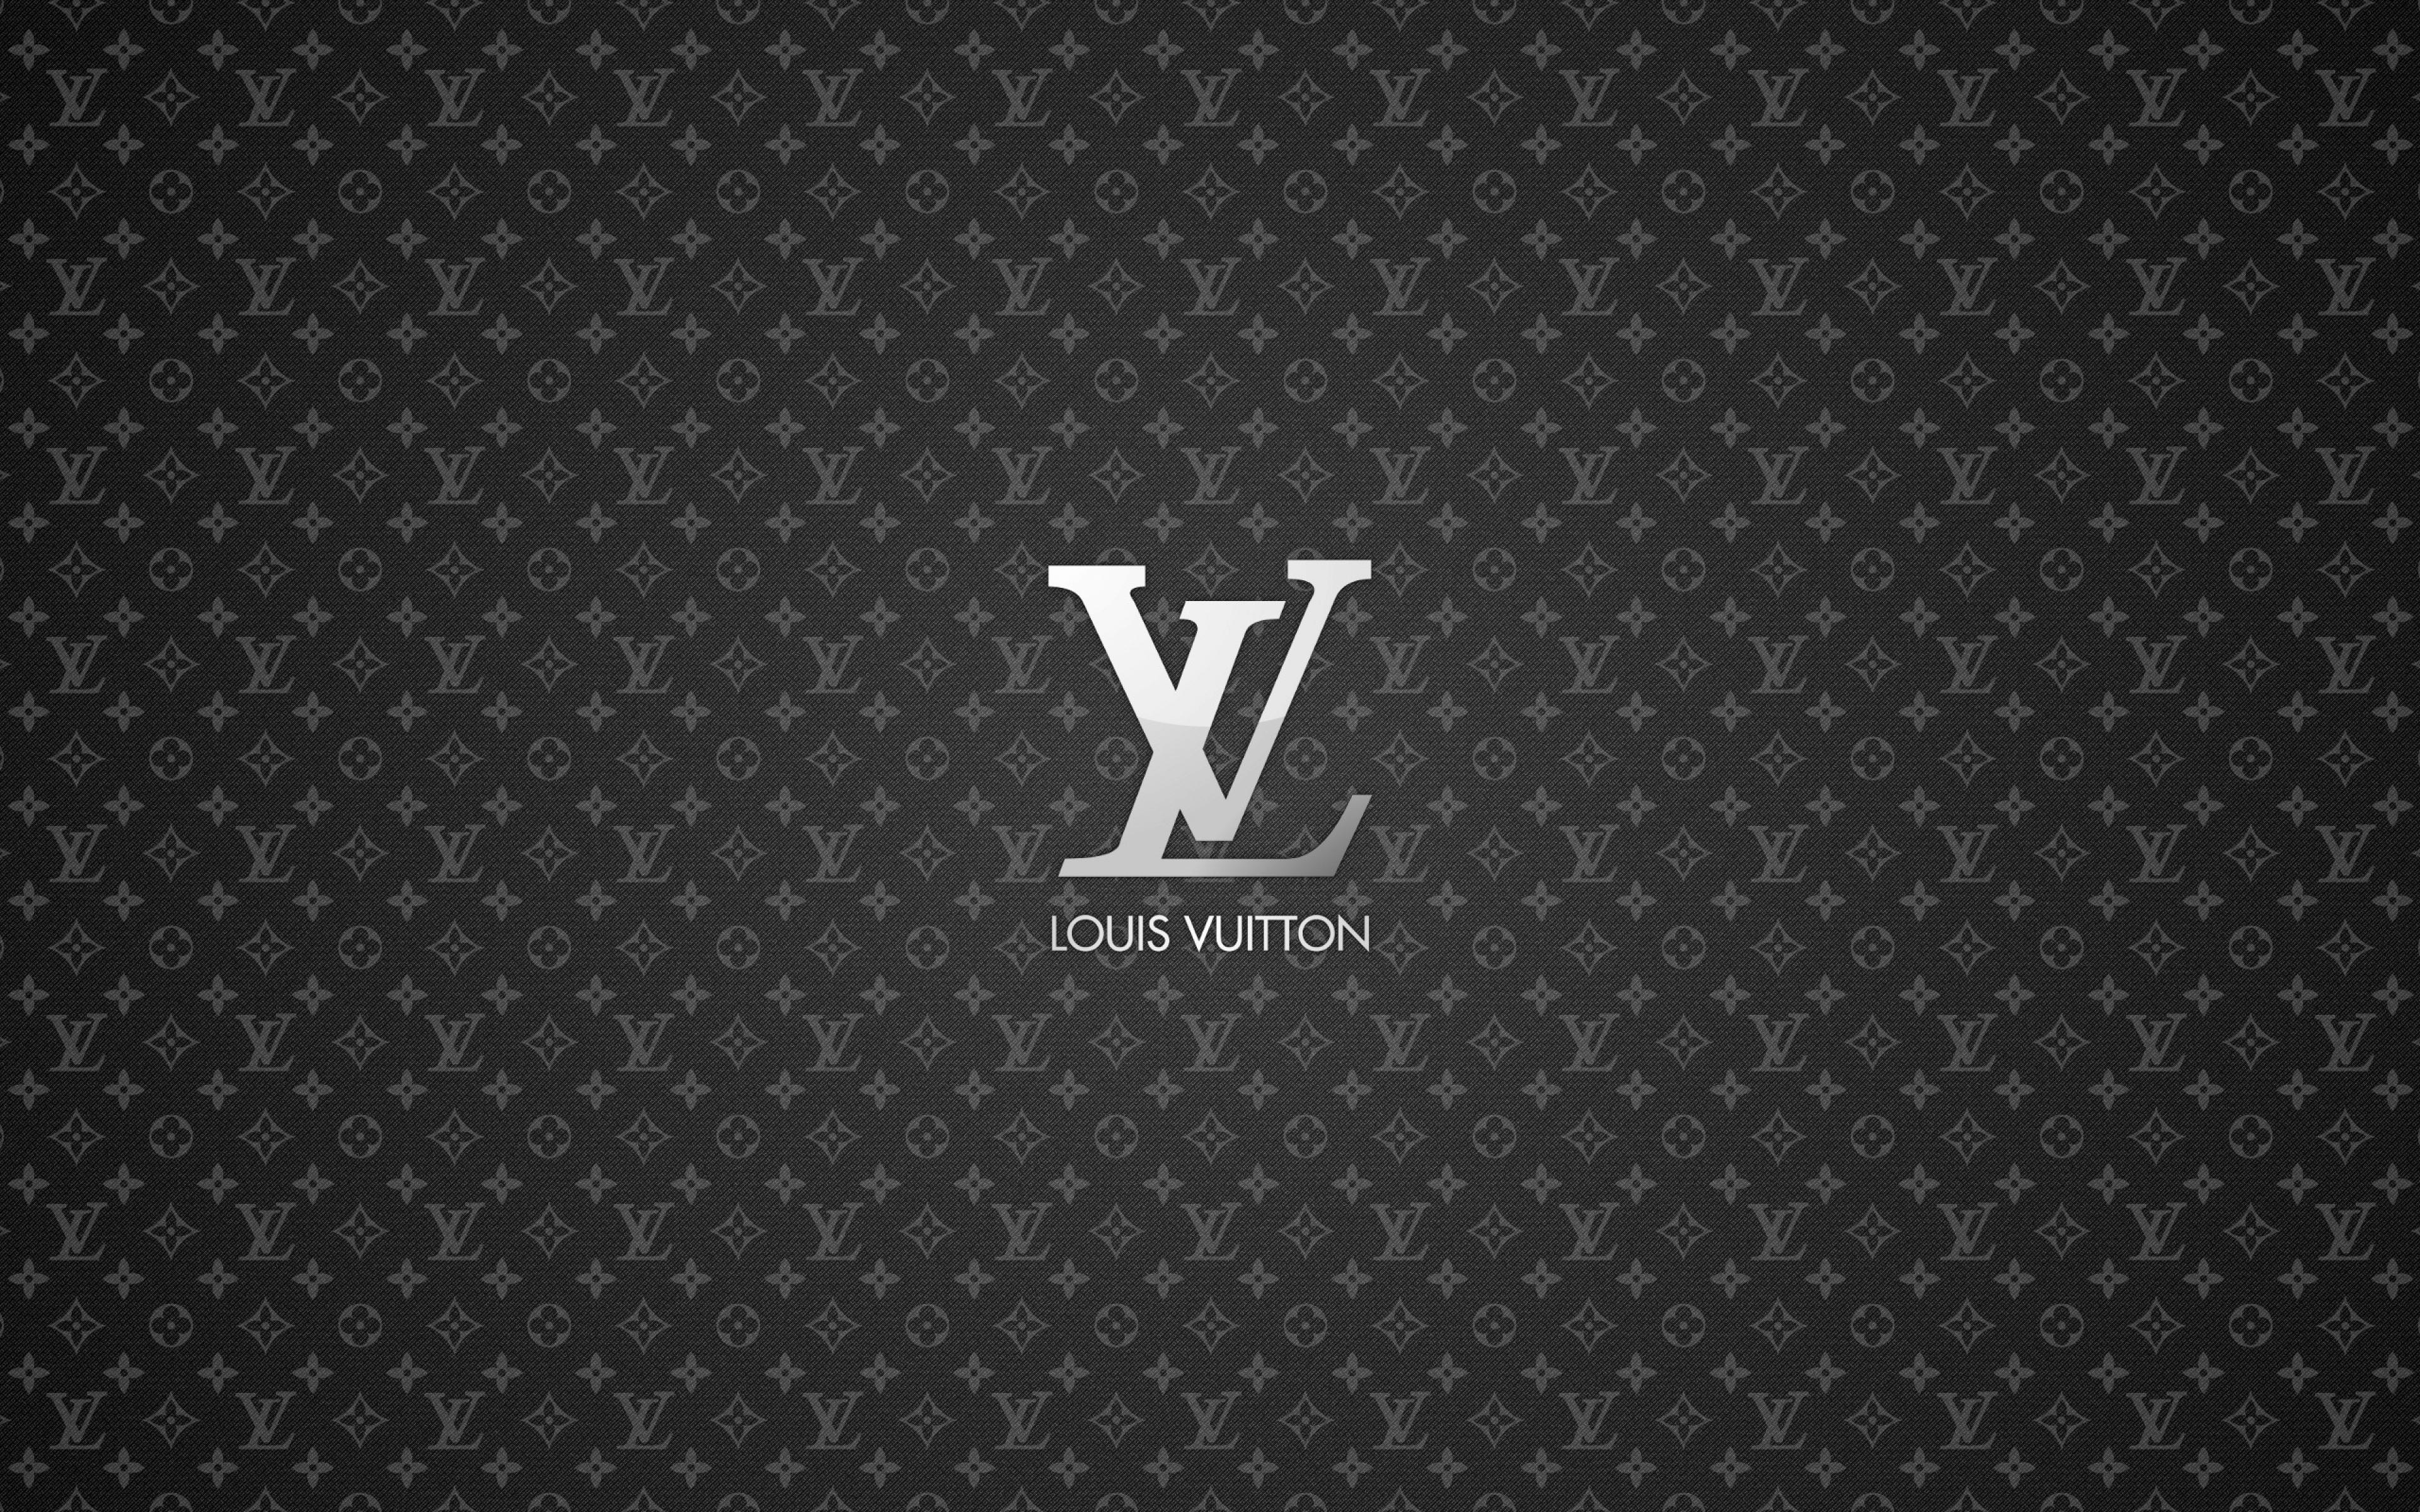 Louis Vuitton 4k wallpaper